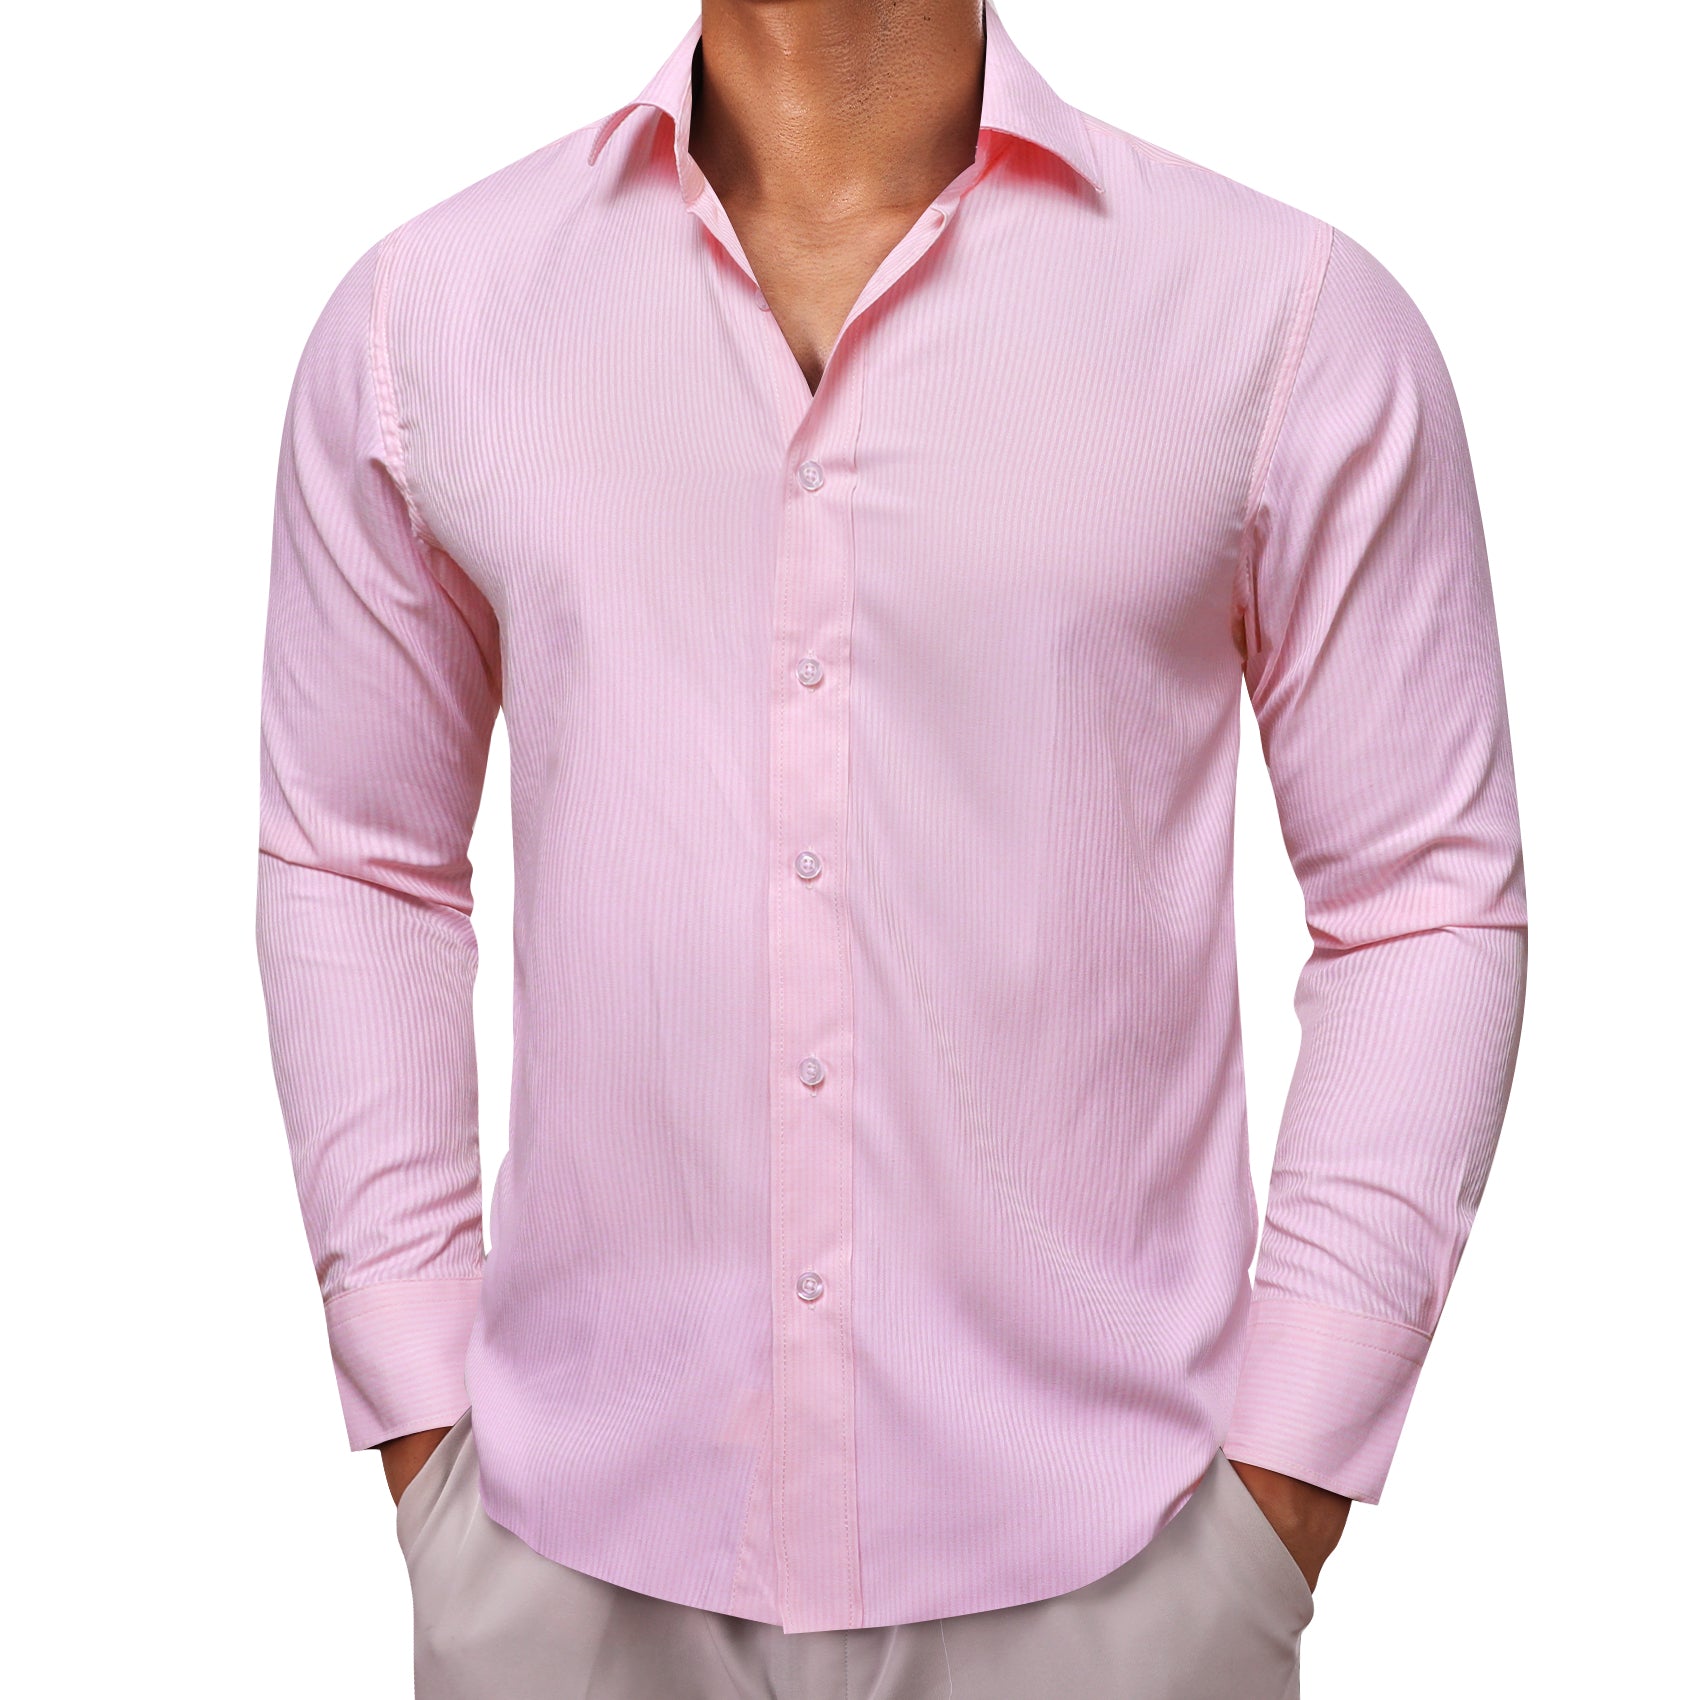 Barry.wang Pink Solid Men's Shirt